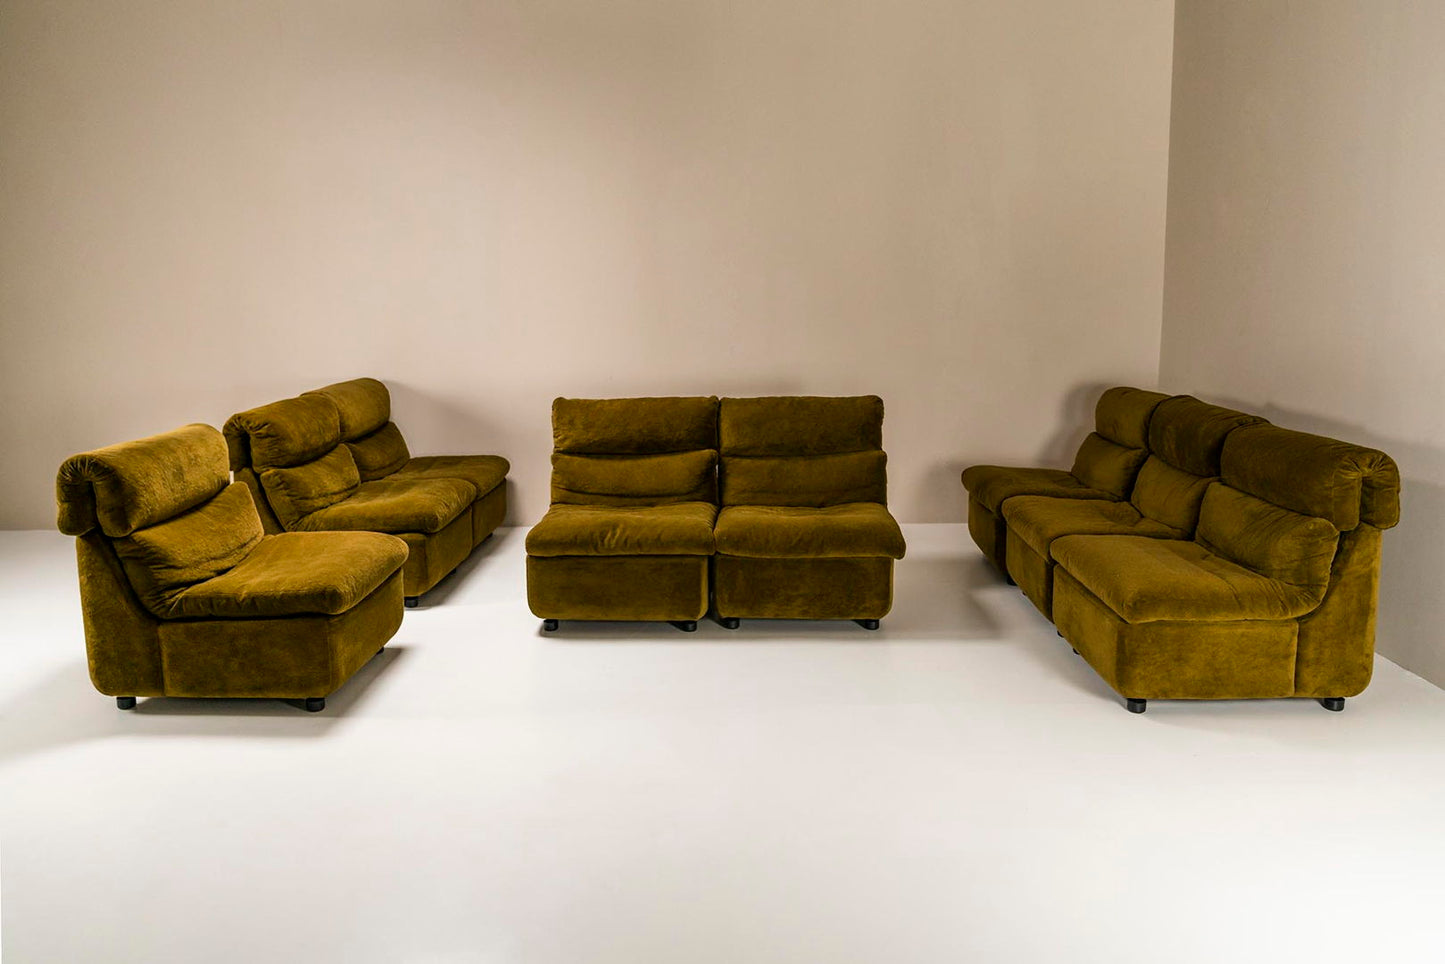 Green Modular Sofa ConsistingOf 8 Elements, Italy 1970s